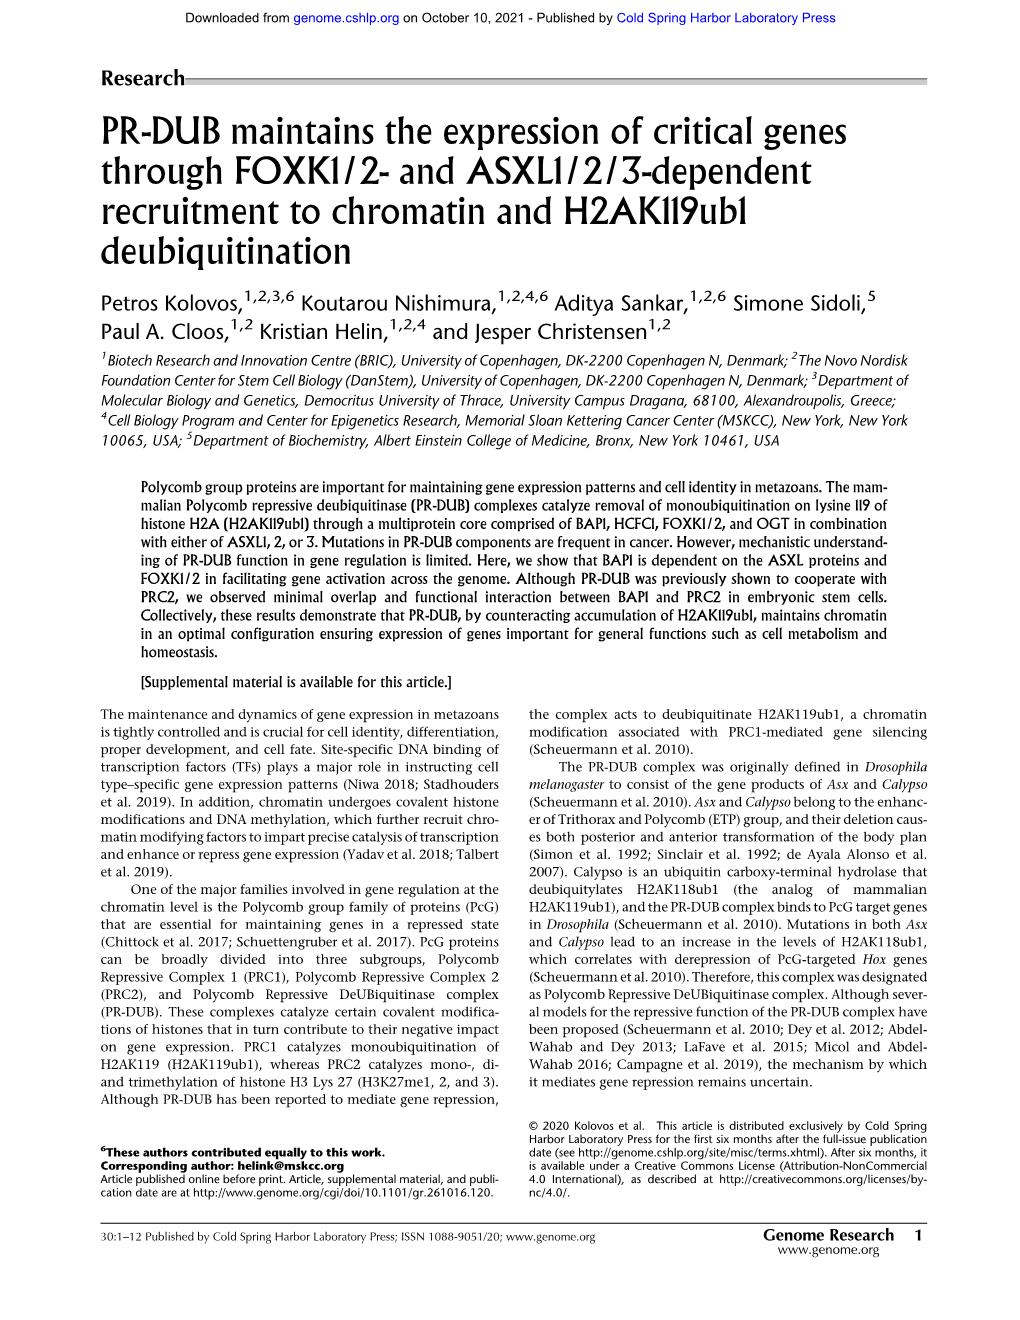 PR-DUB Maintains the Expression of Critical Genes Through FOXK1/2- and ASXL1/2/3-Dependent Recruitment to Chromatin and H2ak119ub1 Deubiquitination